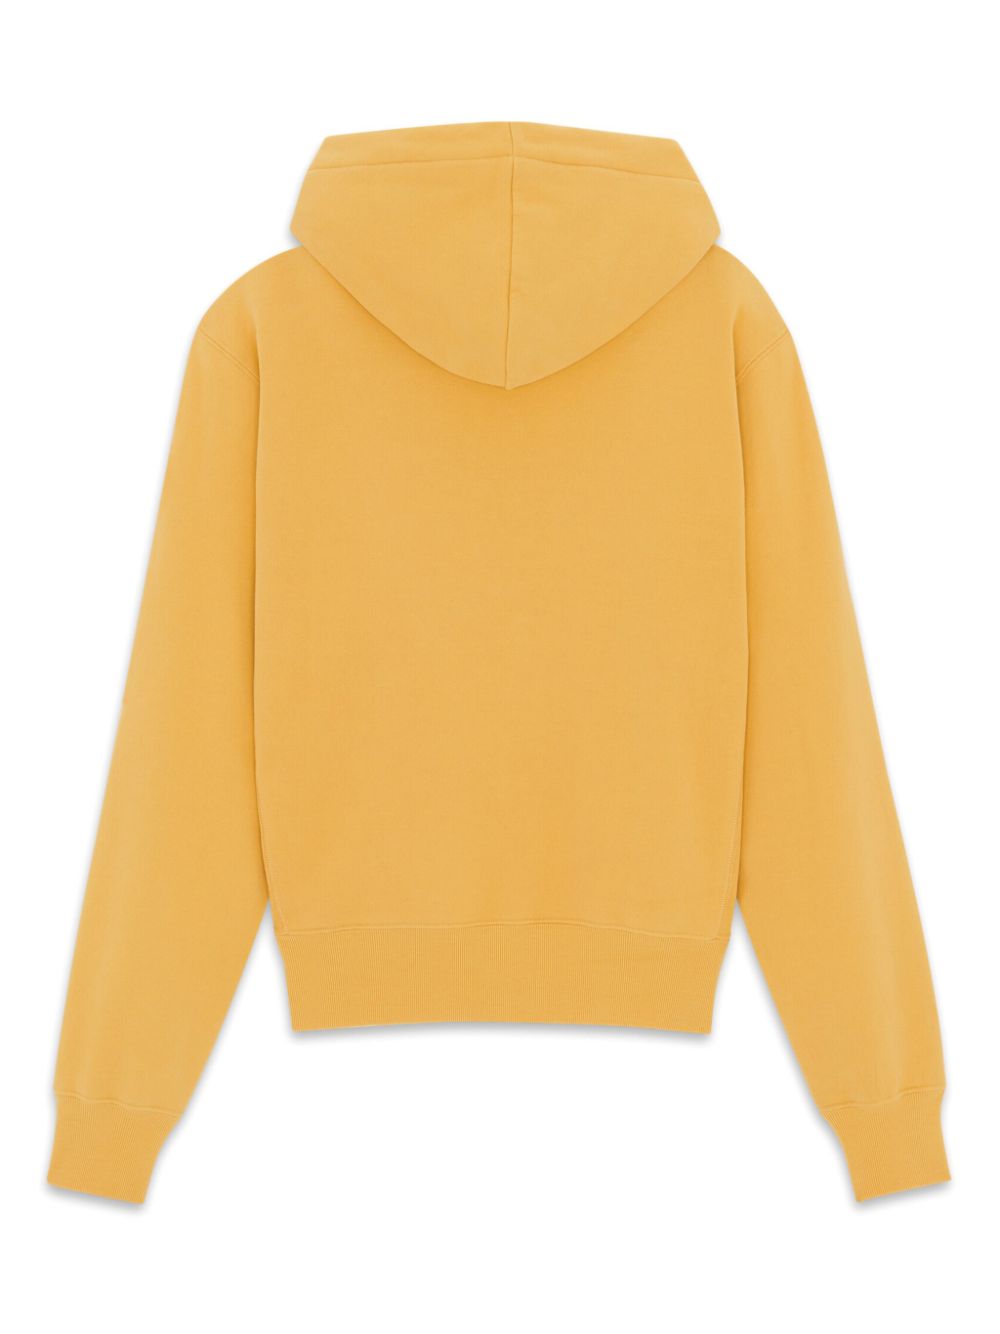 Saint Laurent  Sweaters Yellow